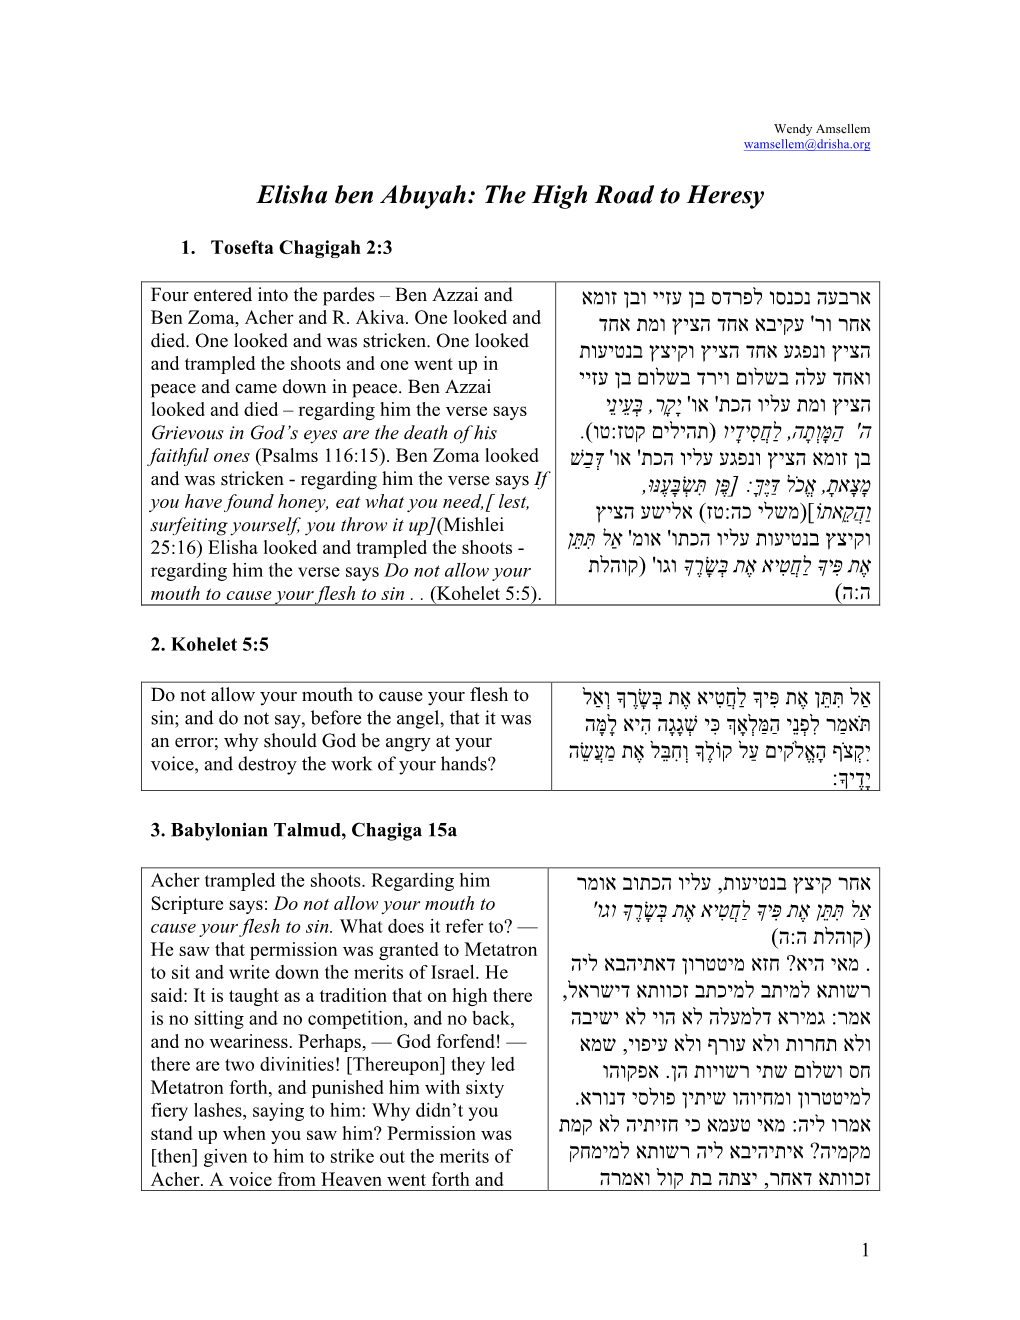 Elisha Ben Abuyah: the High Road to Heresy